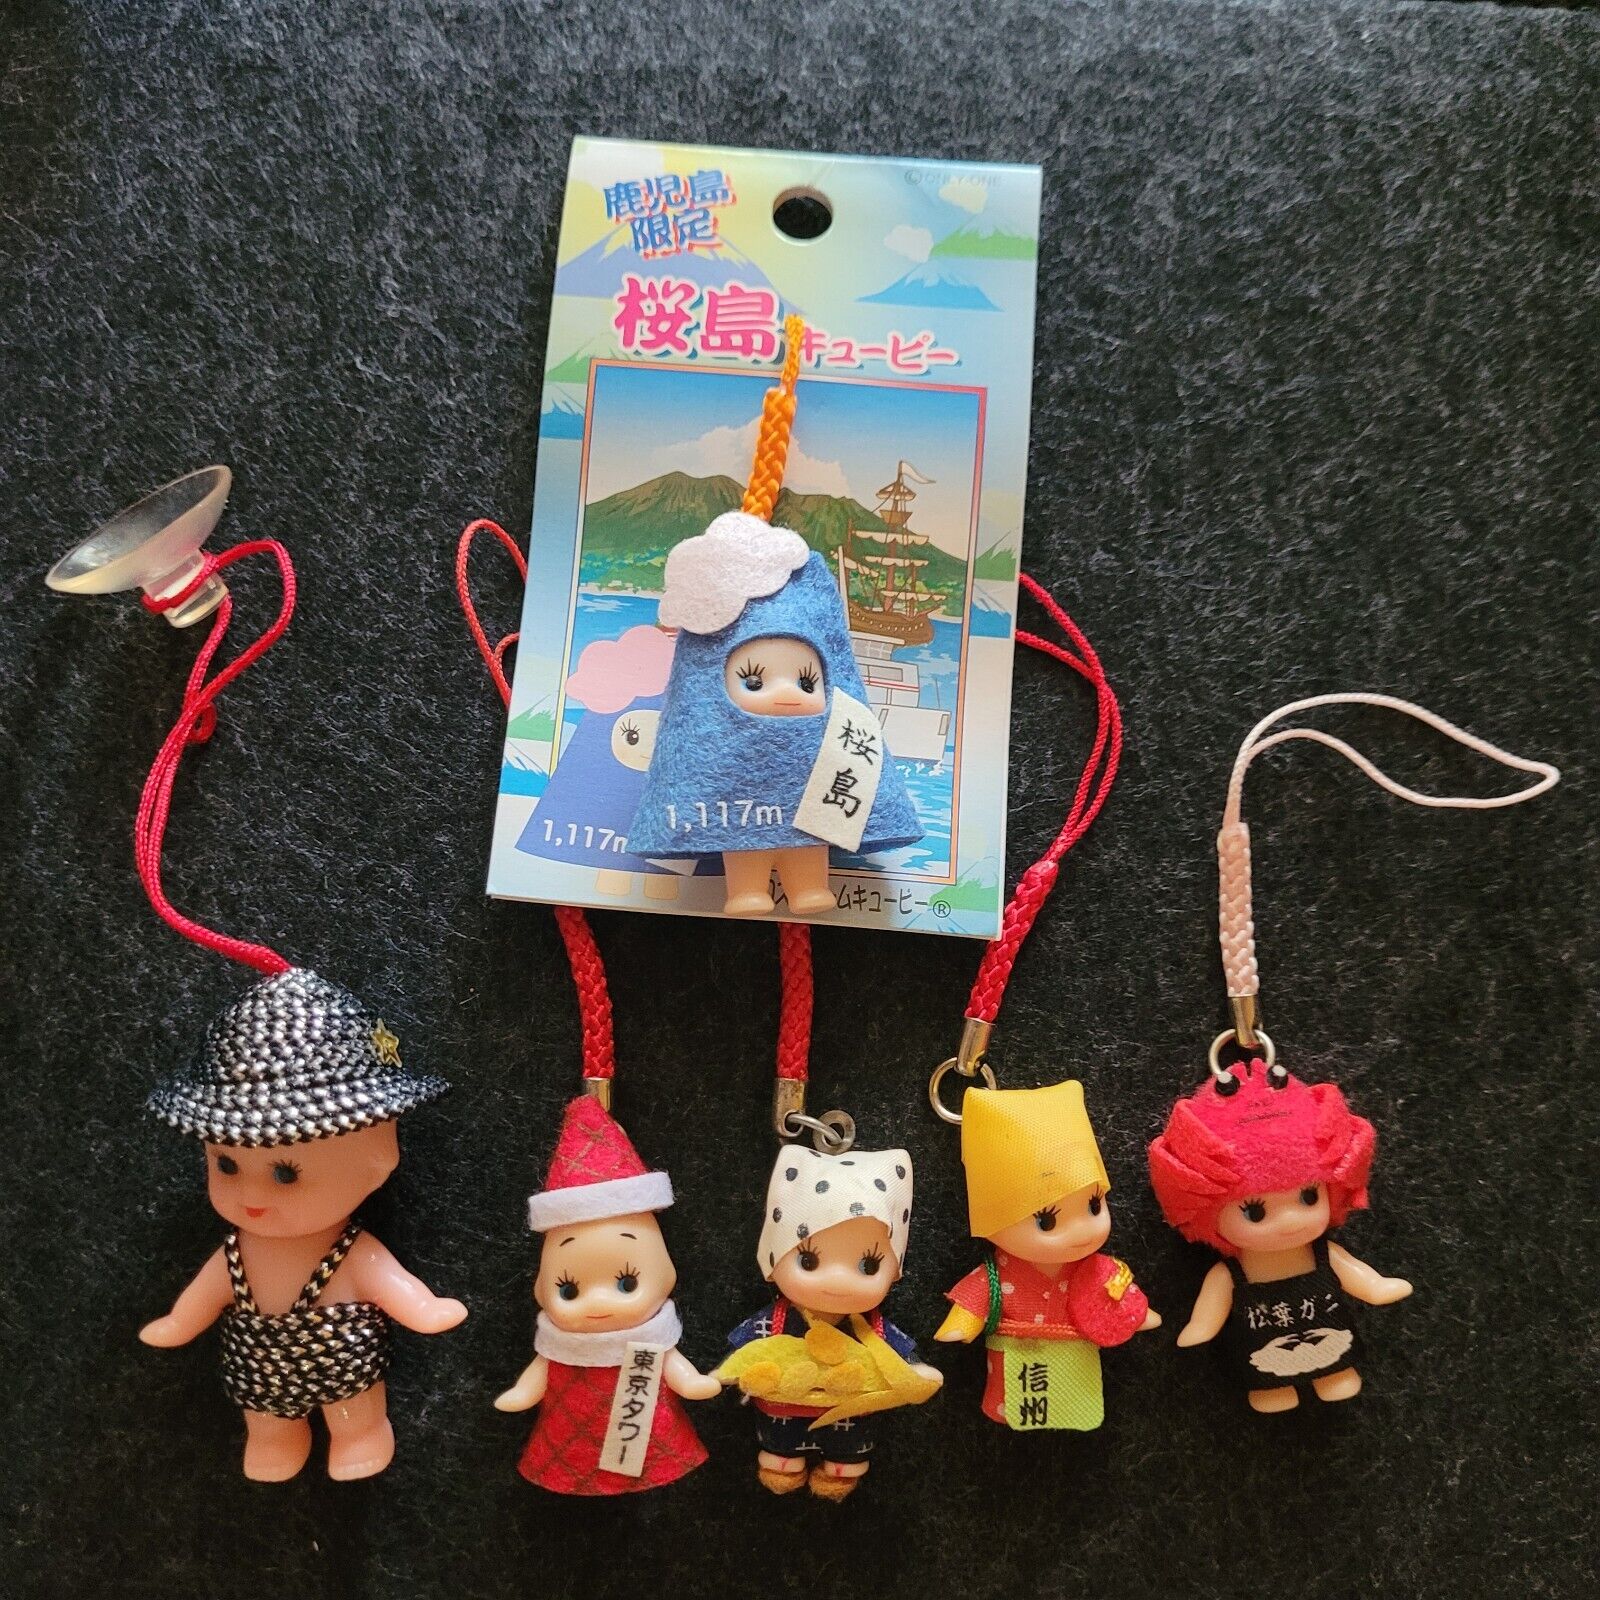 6 Kewpie Gotochi QP Doll Keychain Phone charm Figure strap Japan dolls mini doll